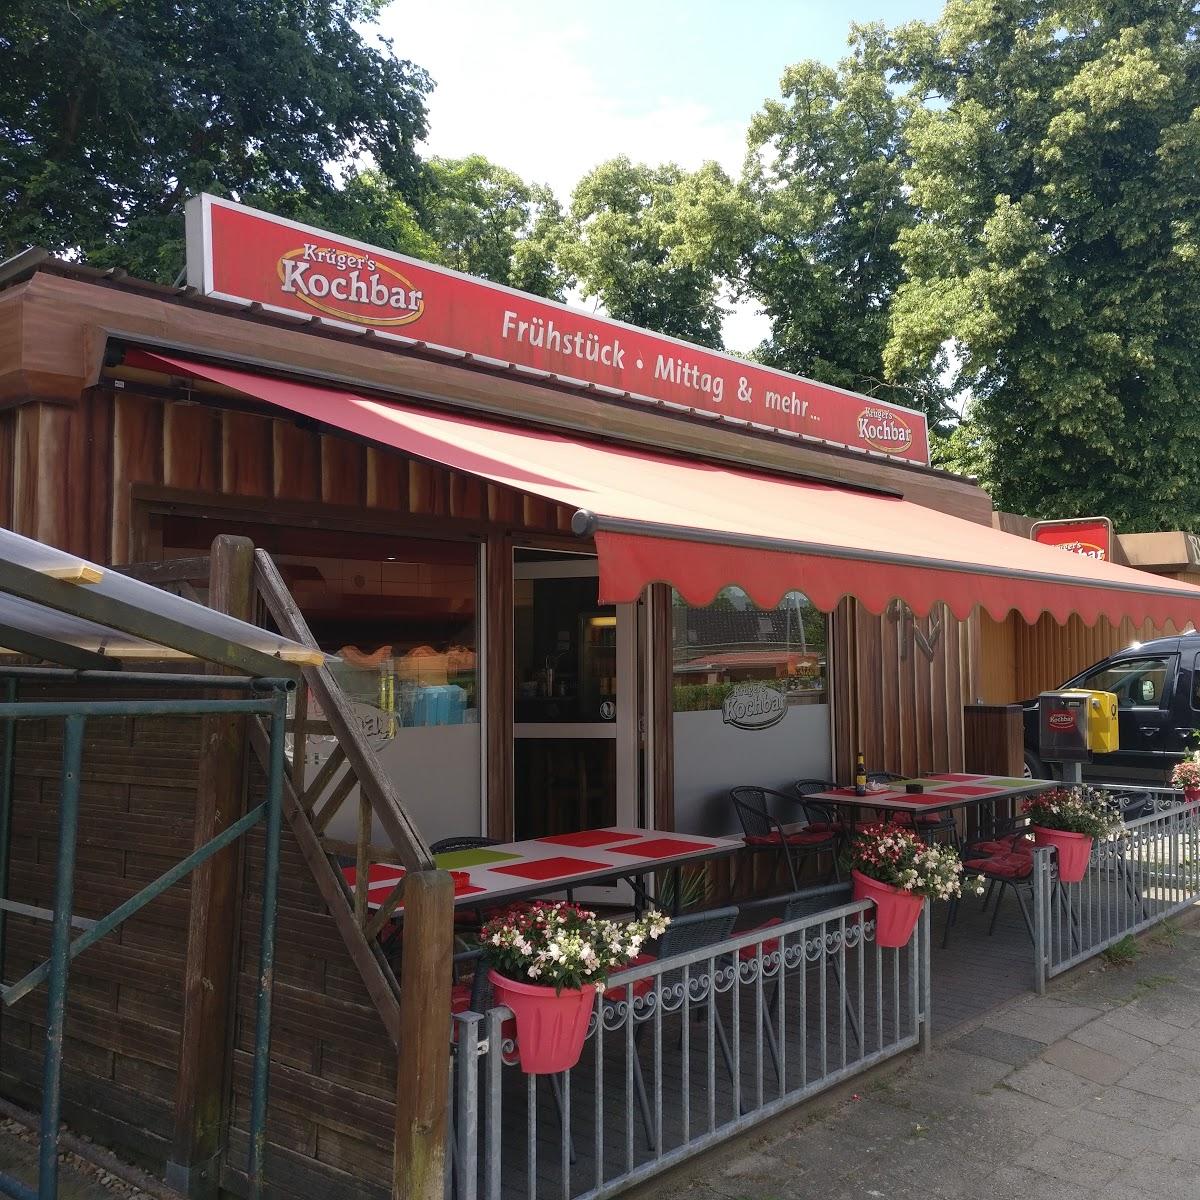 Restaurant "Krügers Kochbar" in Königs Wusterhausen